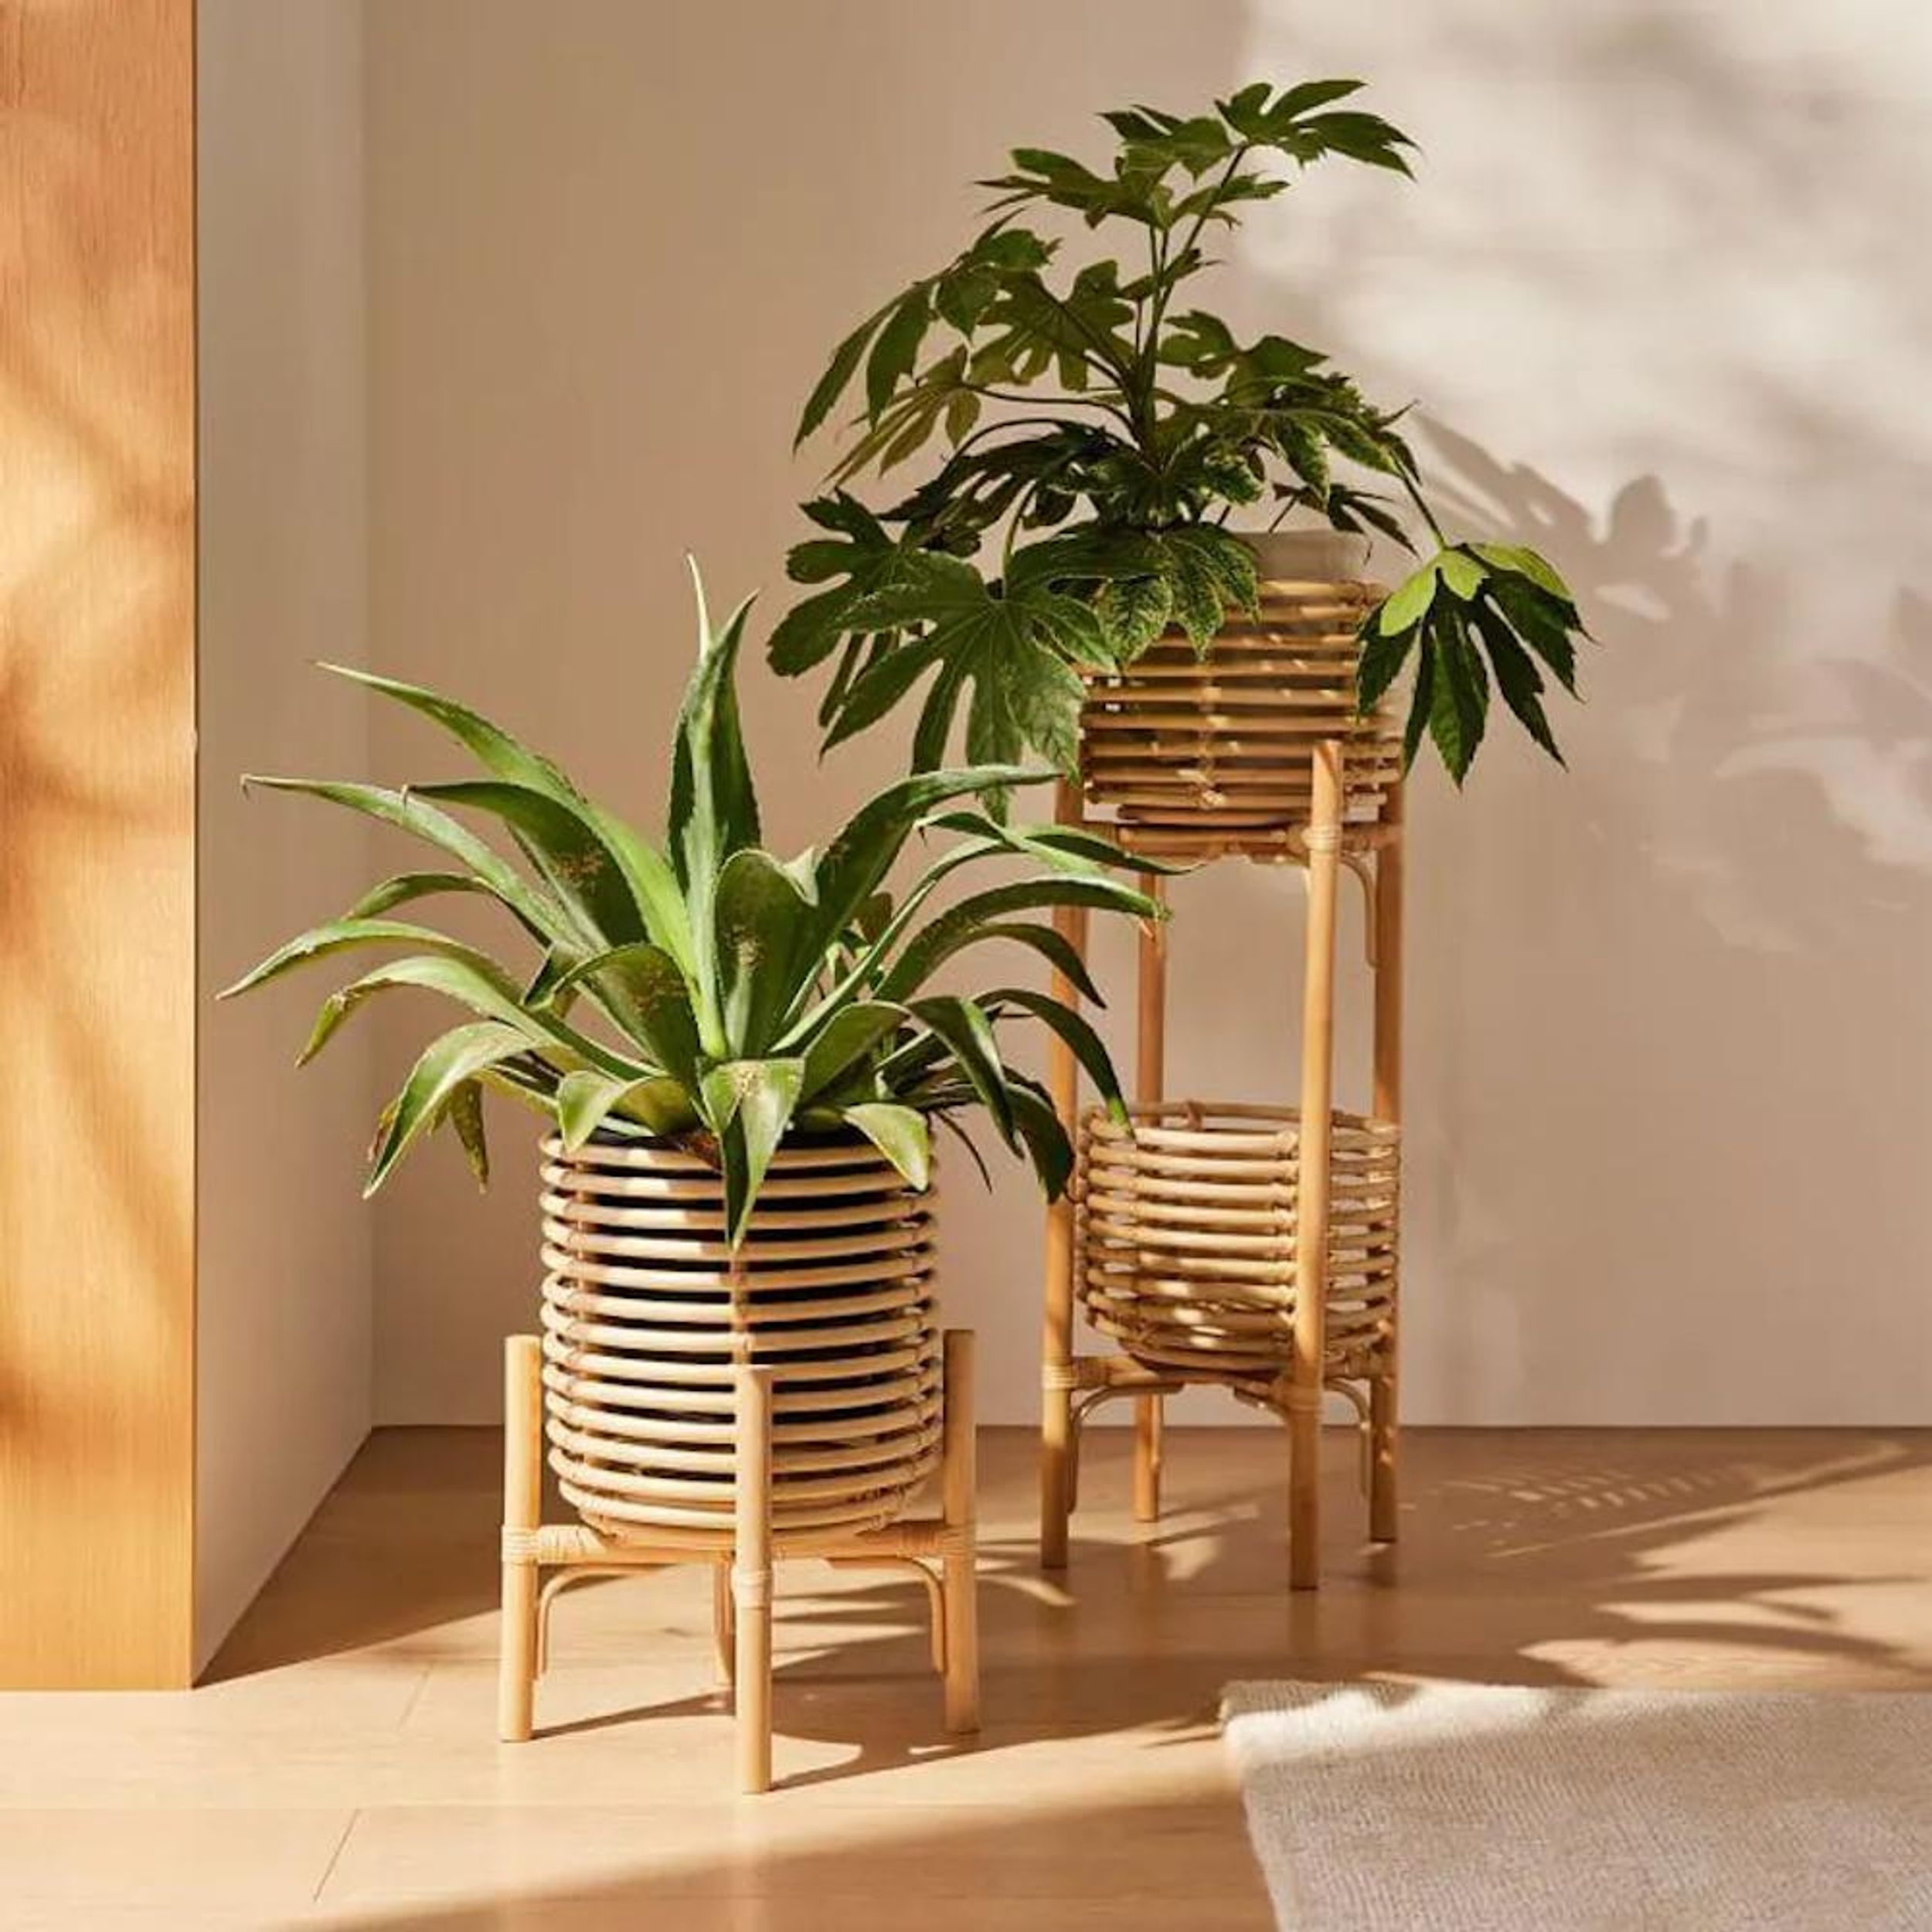 rattan and wicker furniture ideas planter